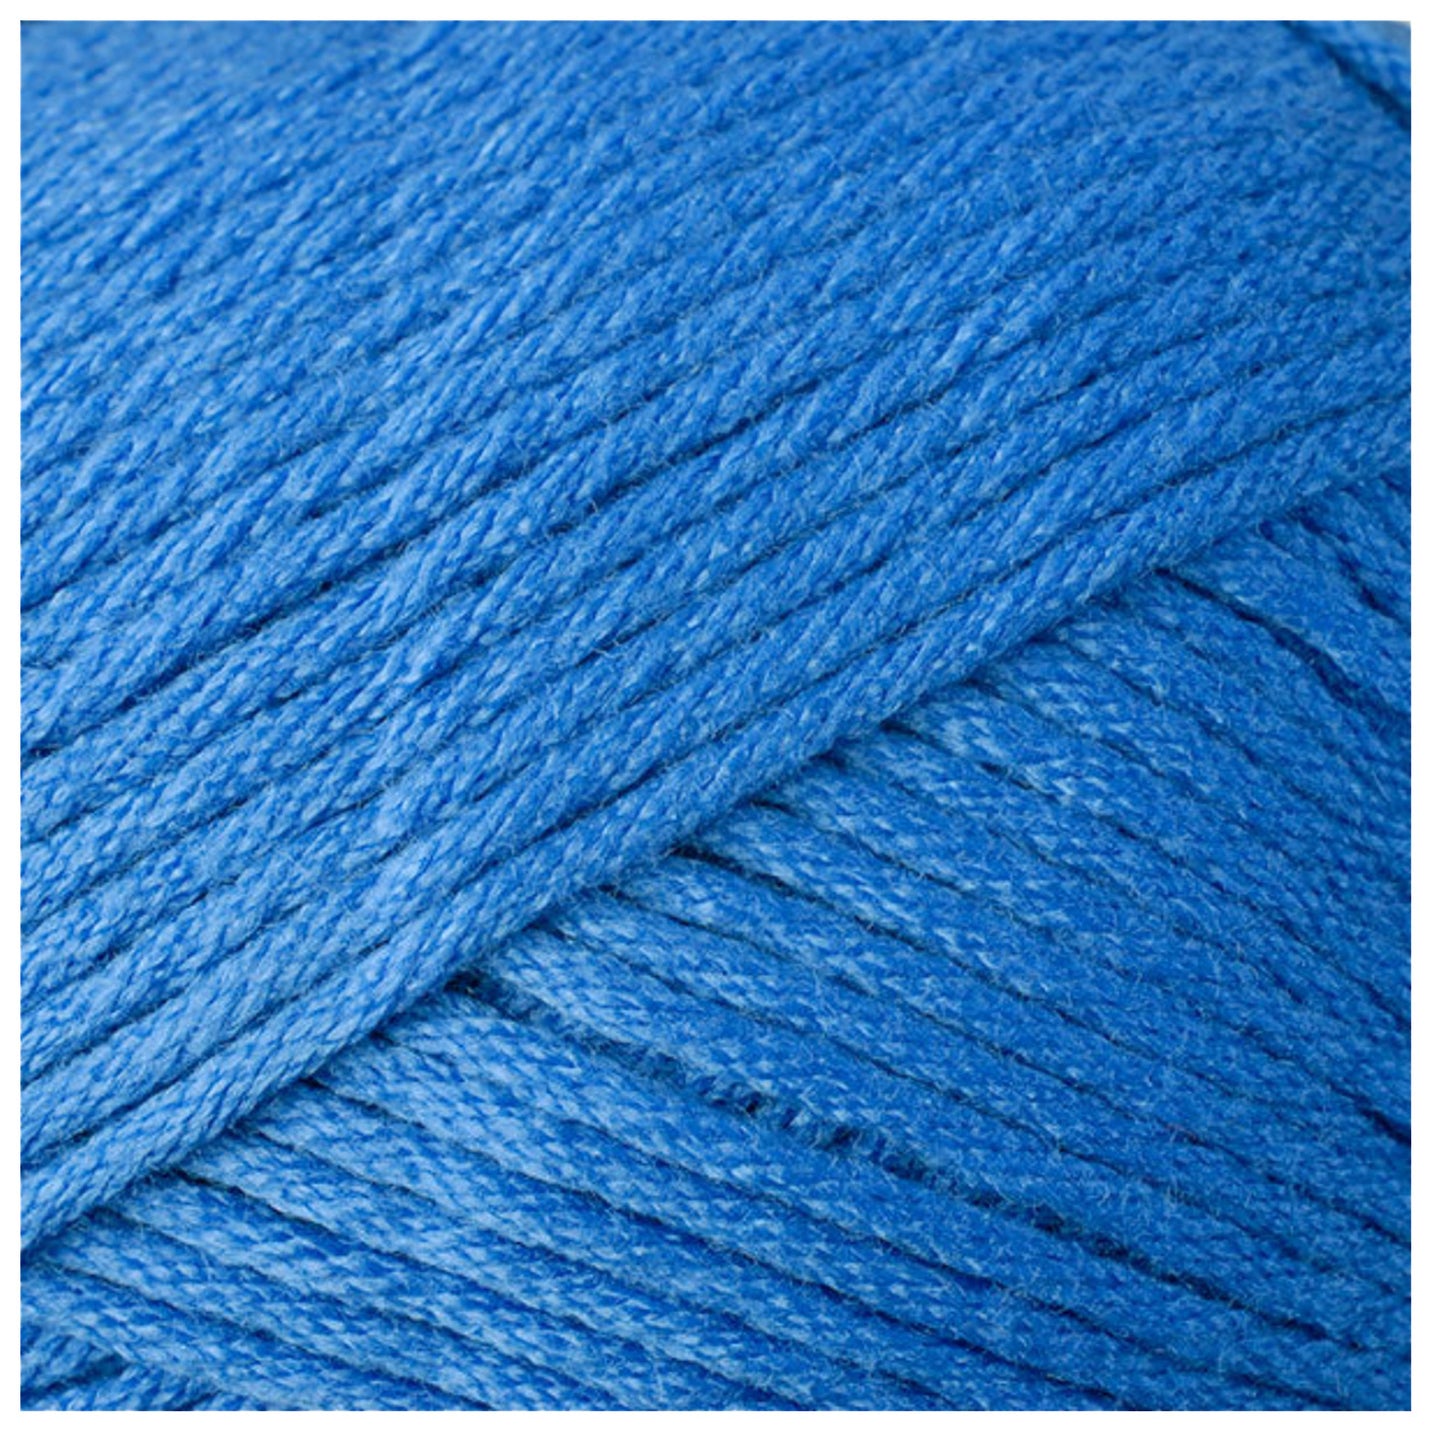 Colorful Crochet Skirt/Cowl - XS/S/M - All Blues Crochet Kit Alternative View #2